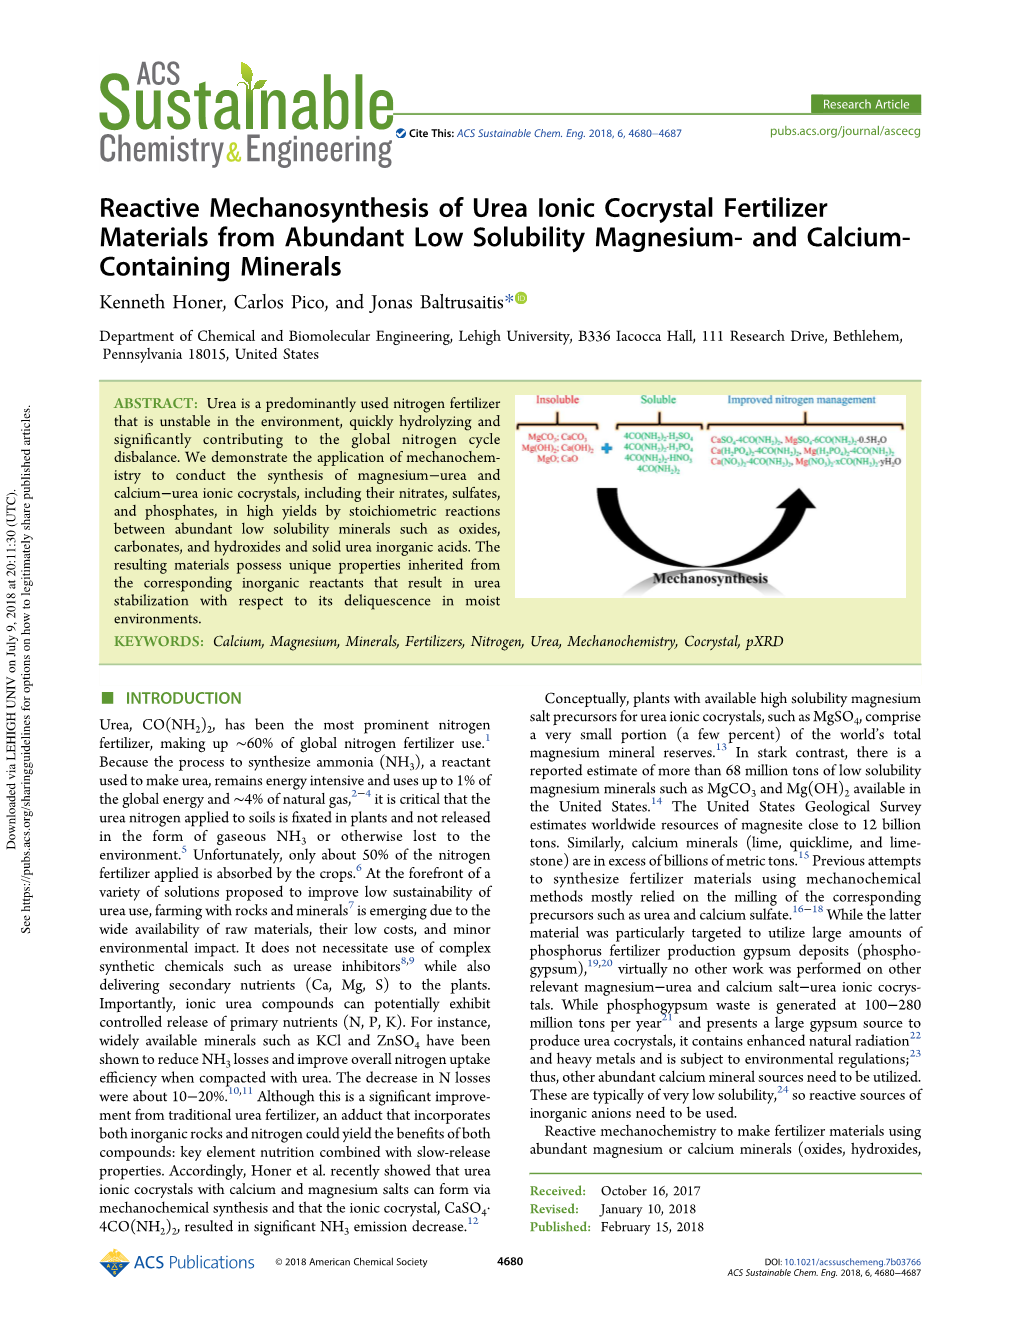 Reactive Mechanosynthesis of Urea Ionic Cocrystal Fertilizer Materials